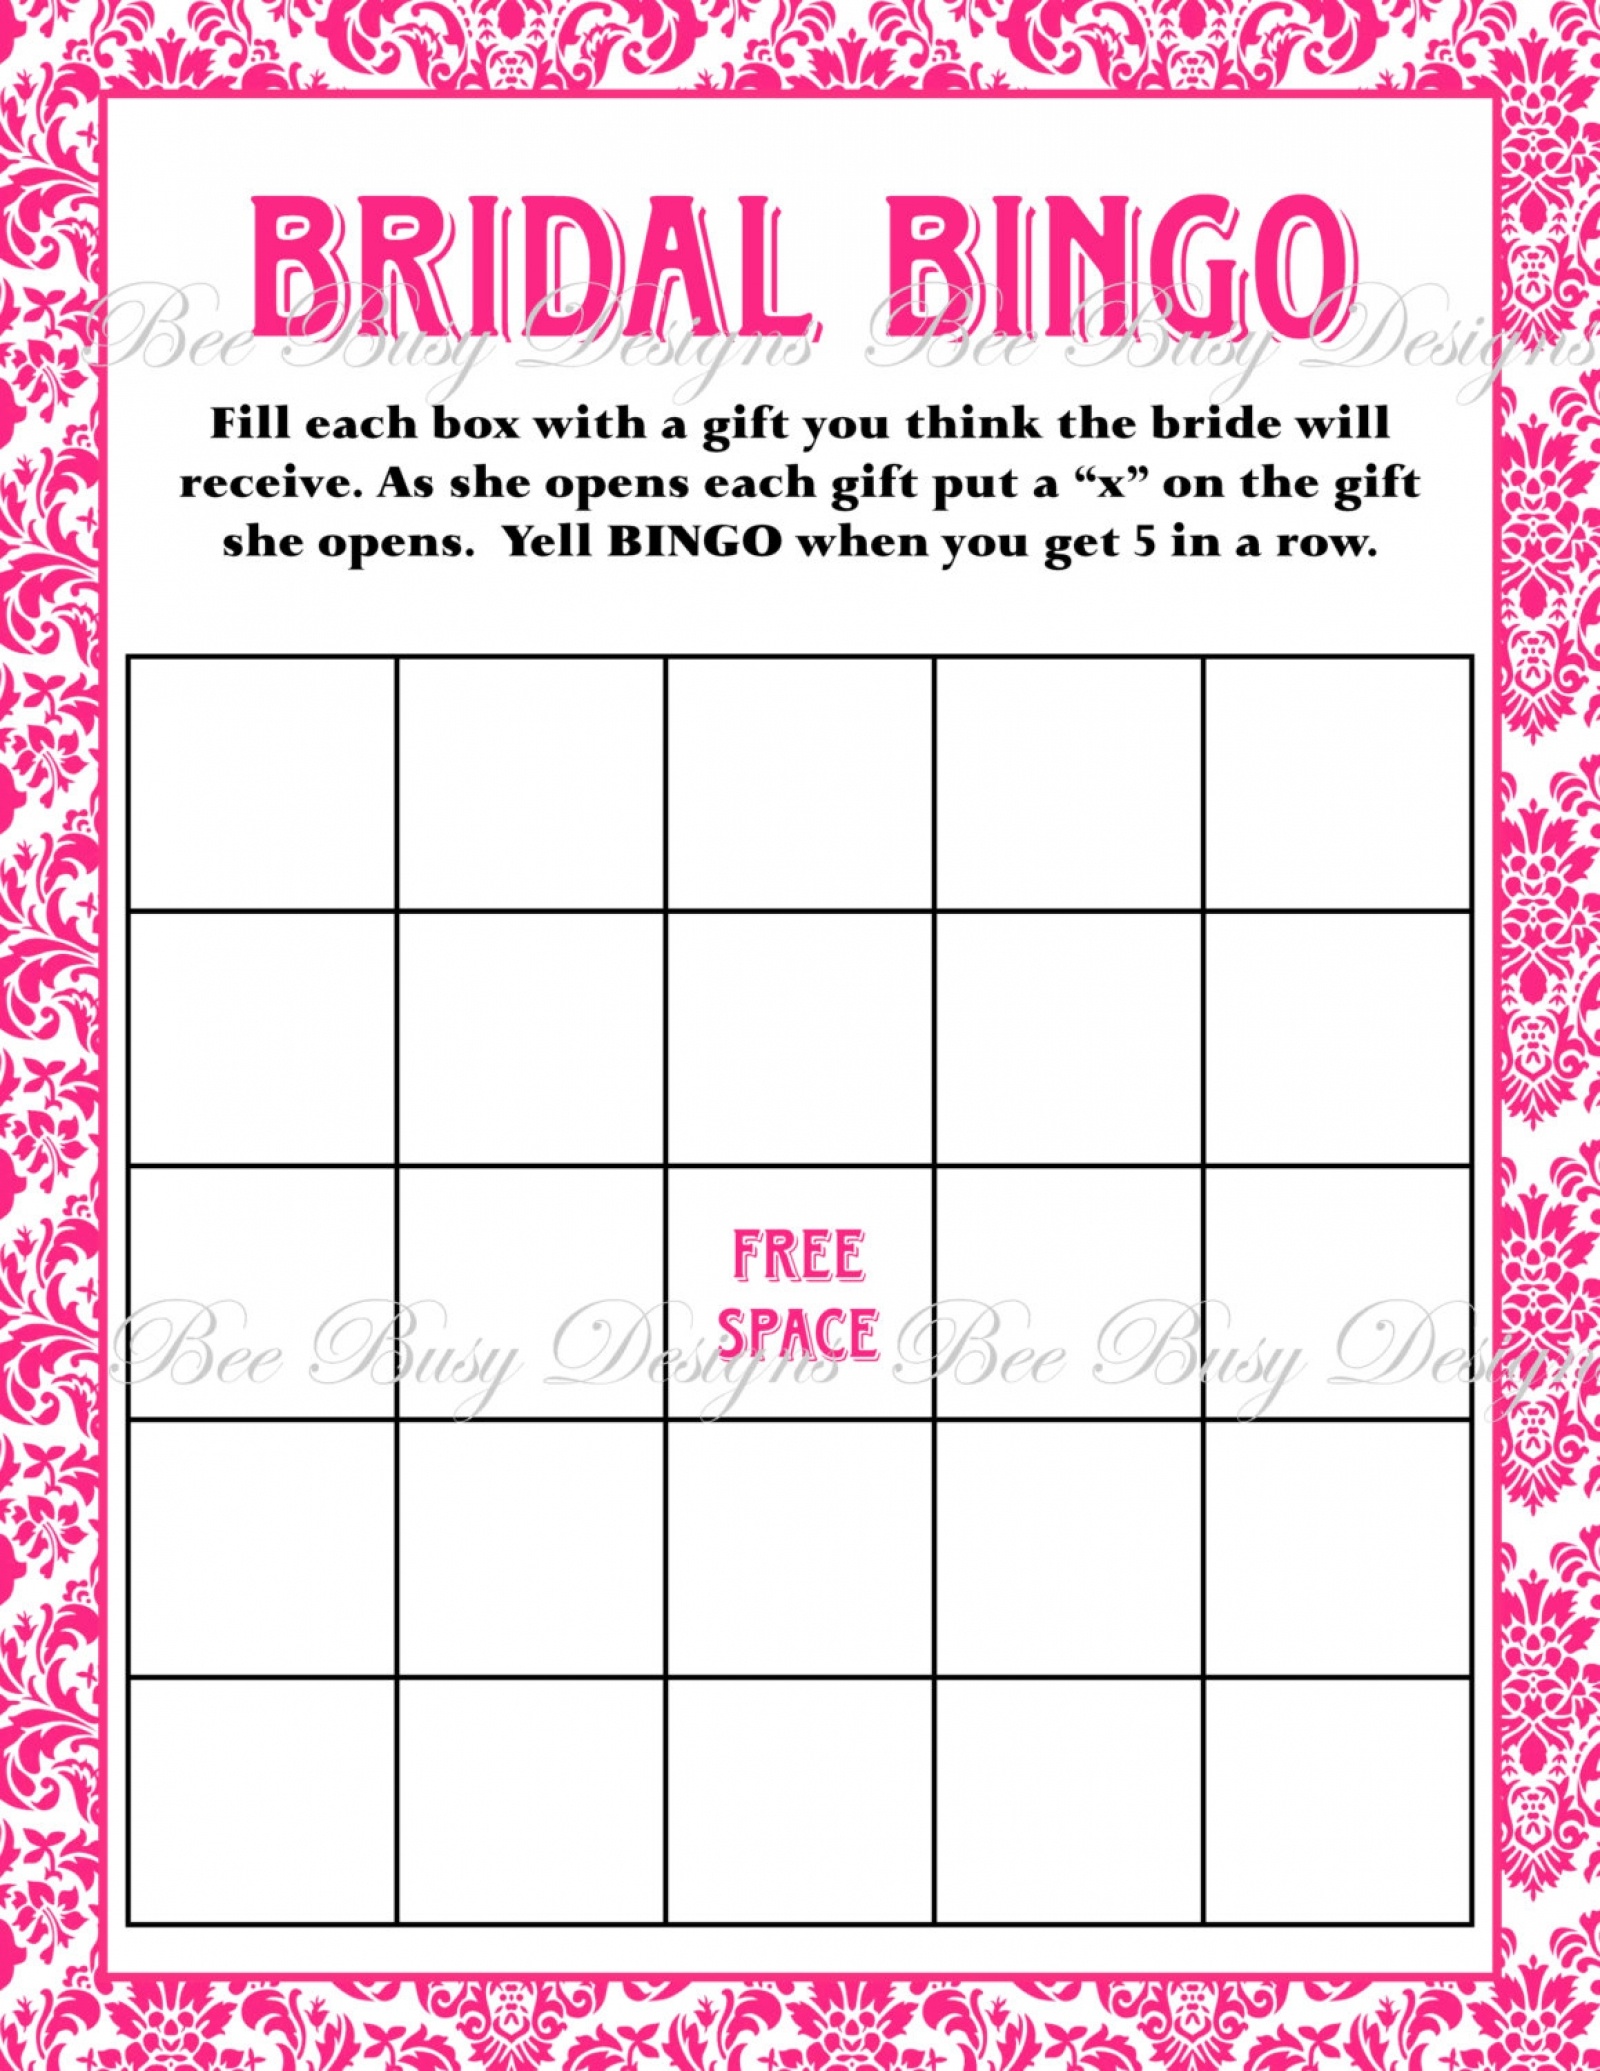 Printable Hot Pink Damask Bridal Shower Bingo Game Instant Download - Free Printable Bridal Shower Blank Bingo Games